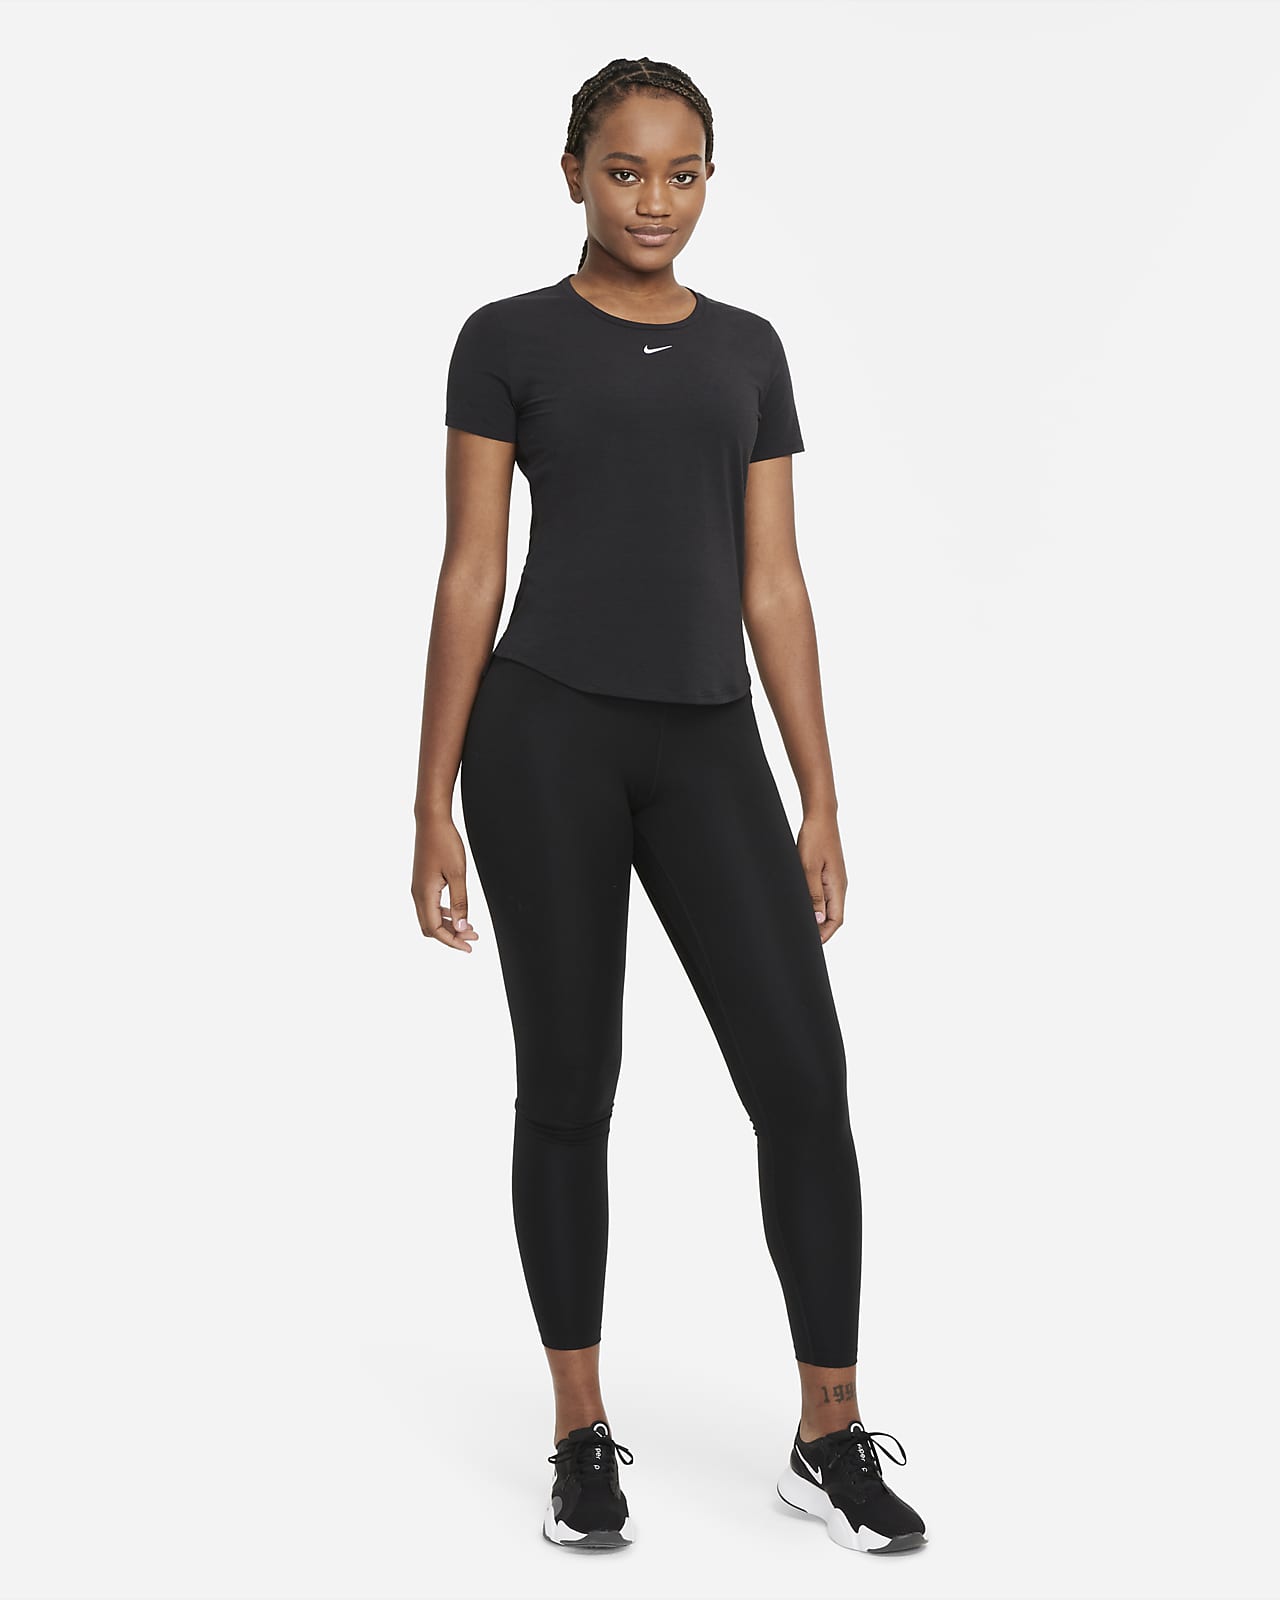 Women\'s Top. Standard UV One Short-Sleeve Dri-FIT Fit Nike Luxe